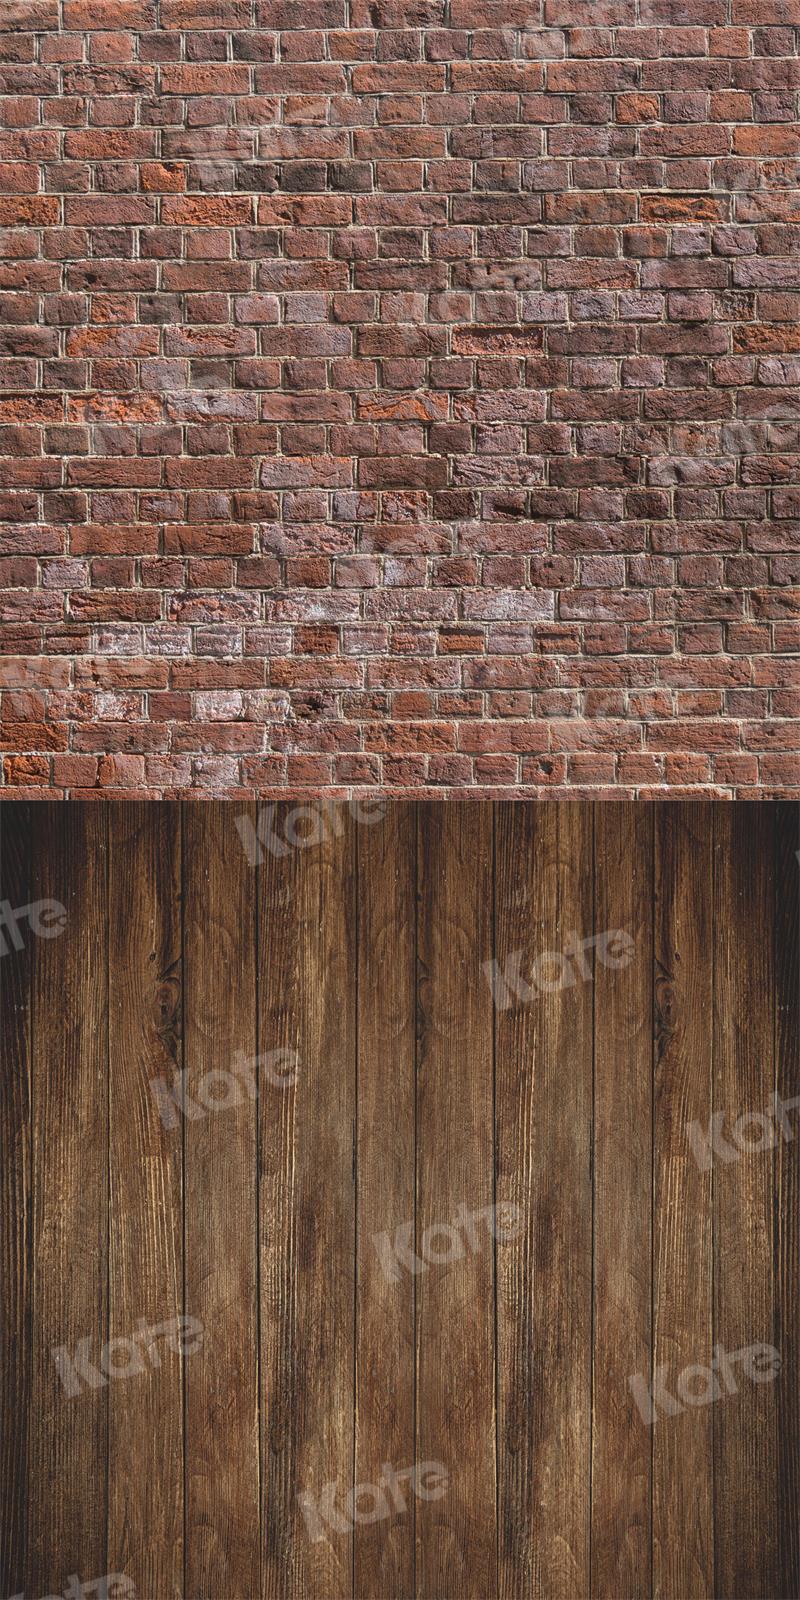 Kate Sweep Brick Wall Backdrop Wood Grain for Photography